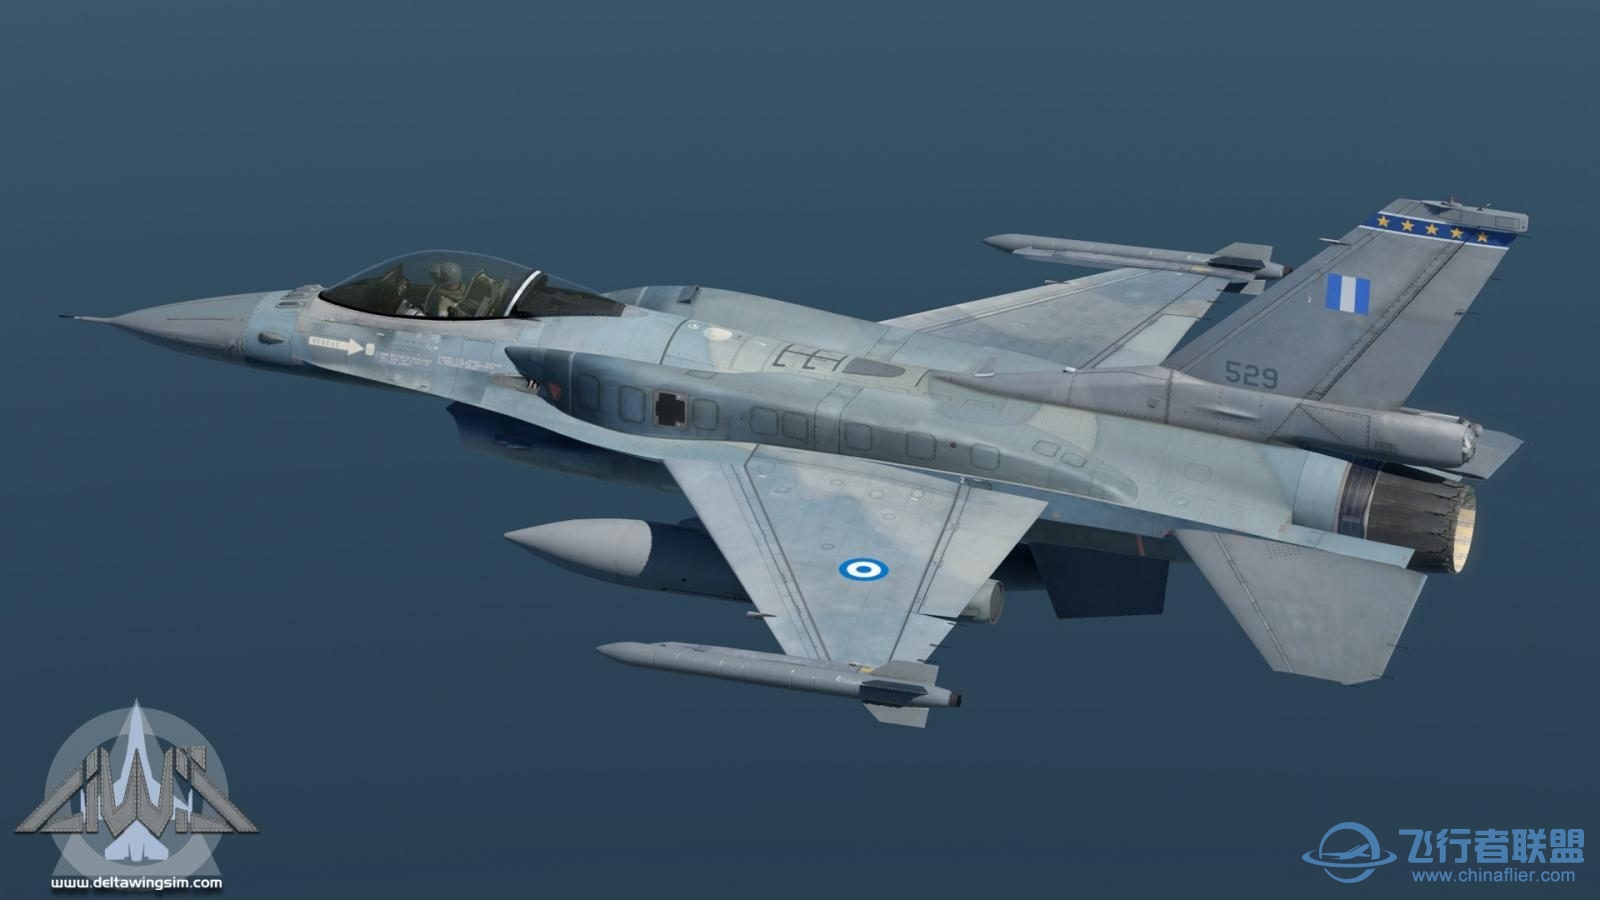 DeltaWing Simulations 发布 F-16C XPL-9658 